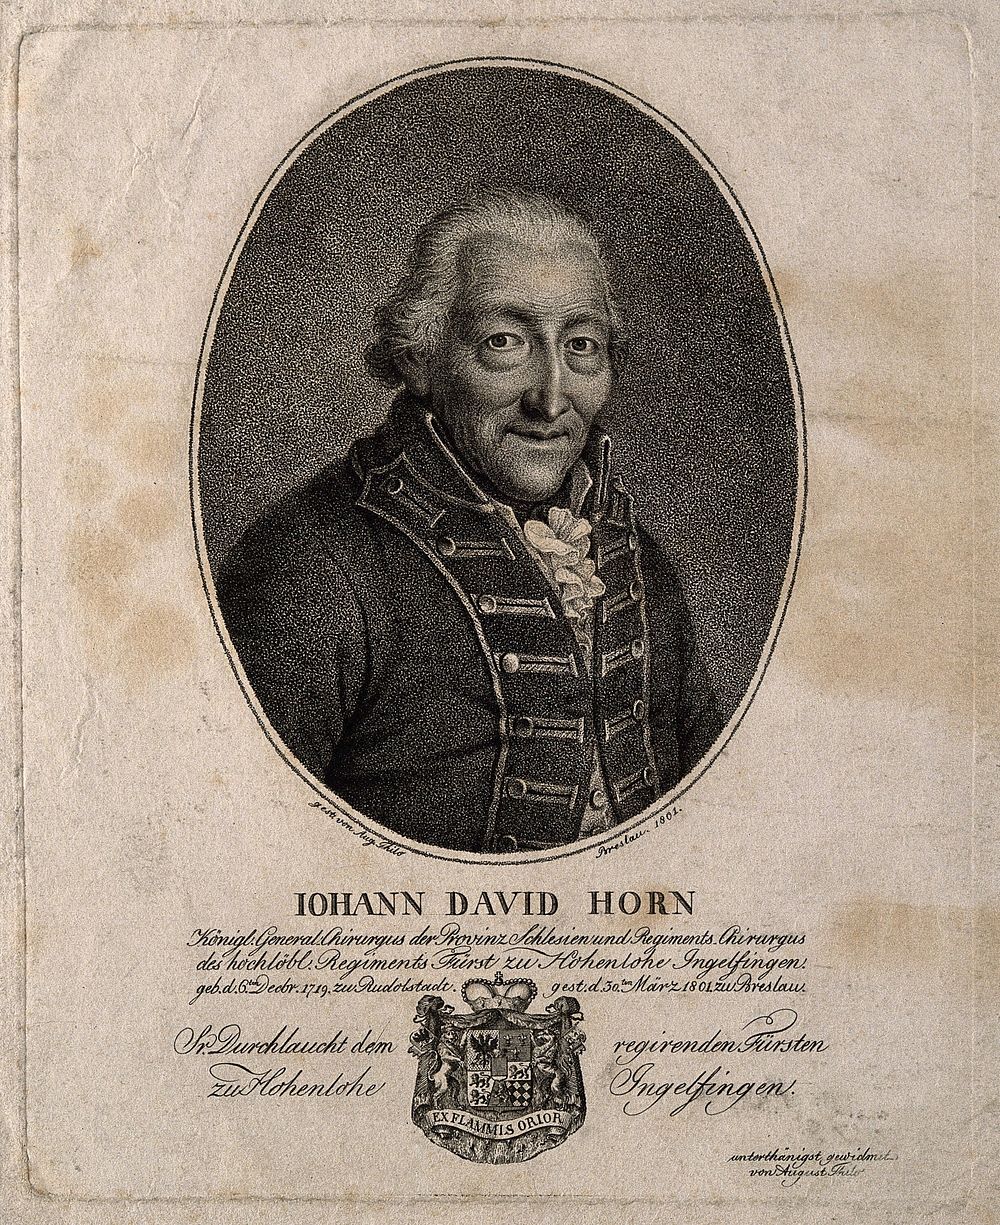 Johann David Horn. Line engraving by A. Thilo, 1801.